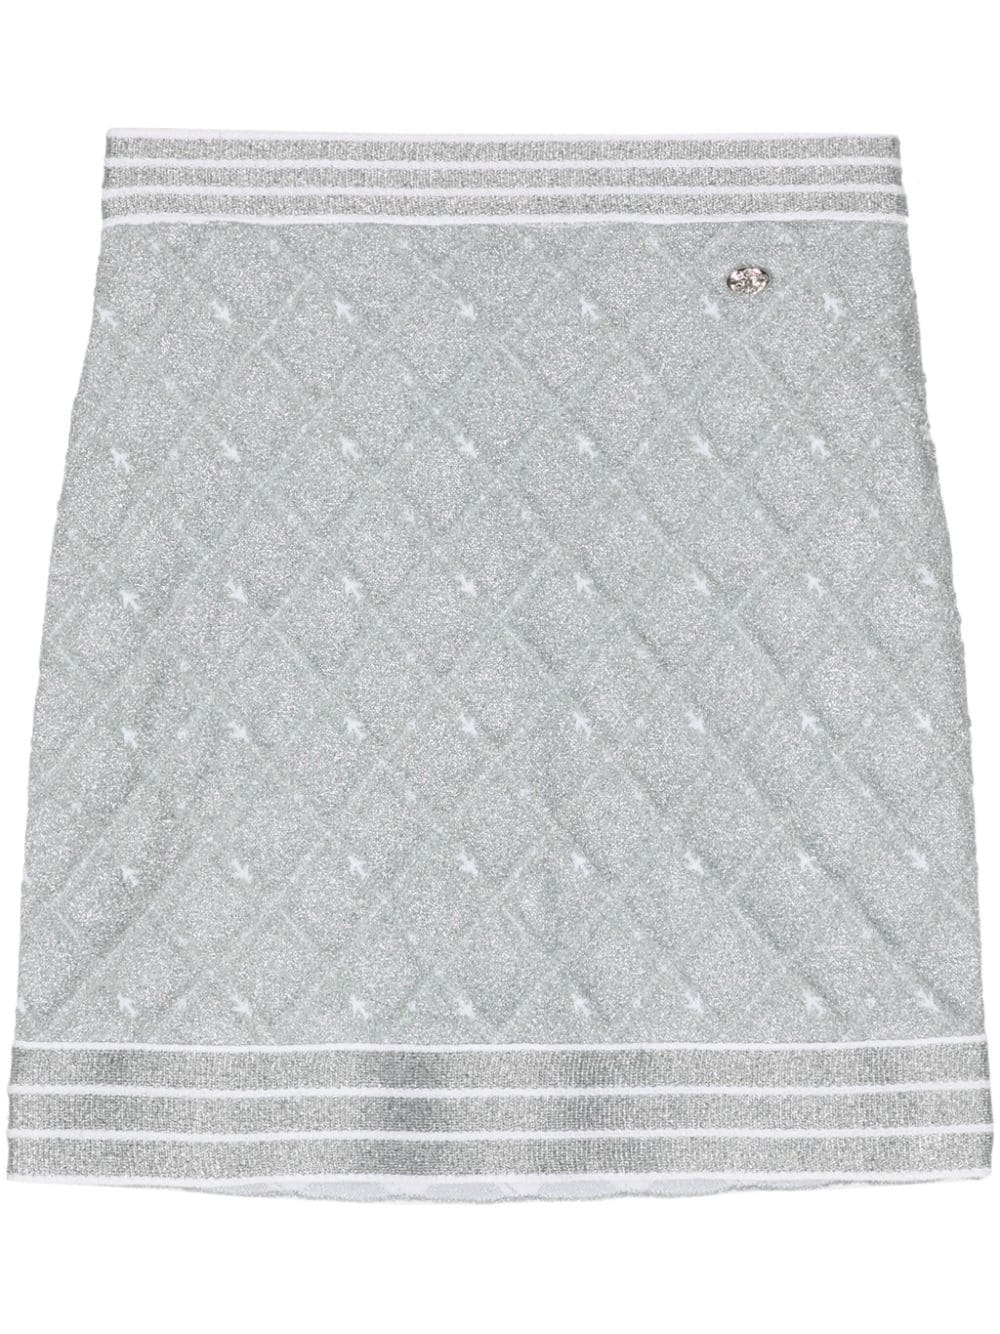 2000s geometric-pattern skirt